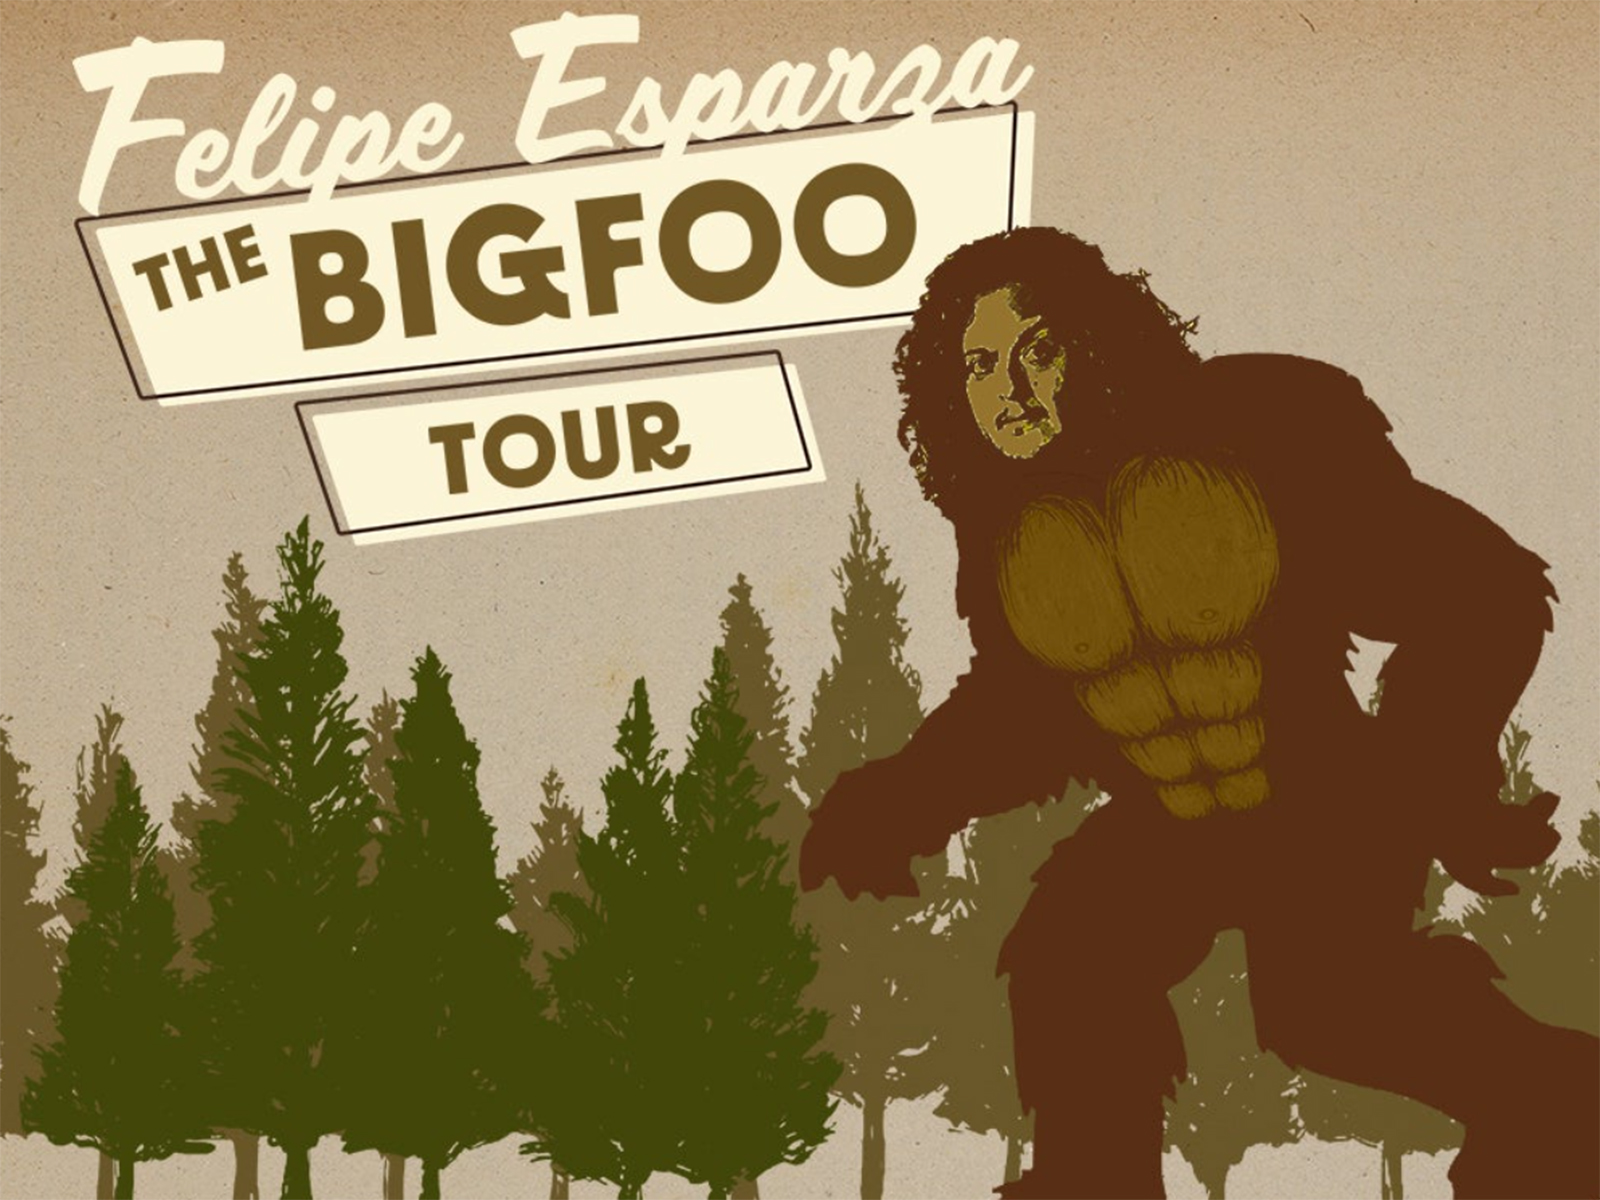 Felipe Esparza "The BIG FOO Tour" Tickets Los Angeles Goldstar